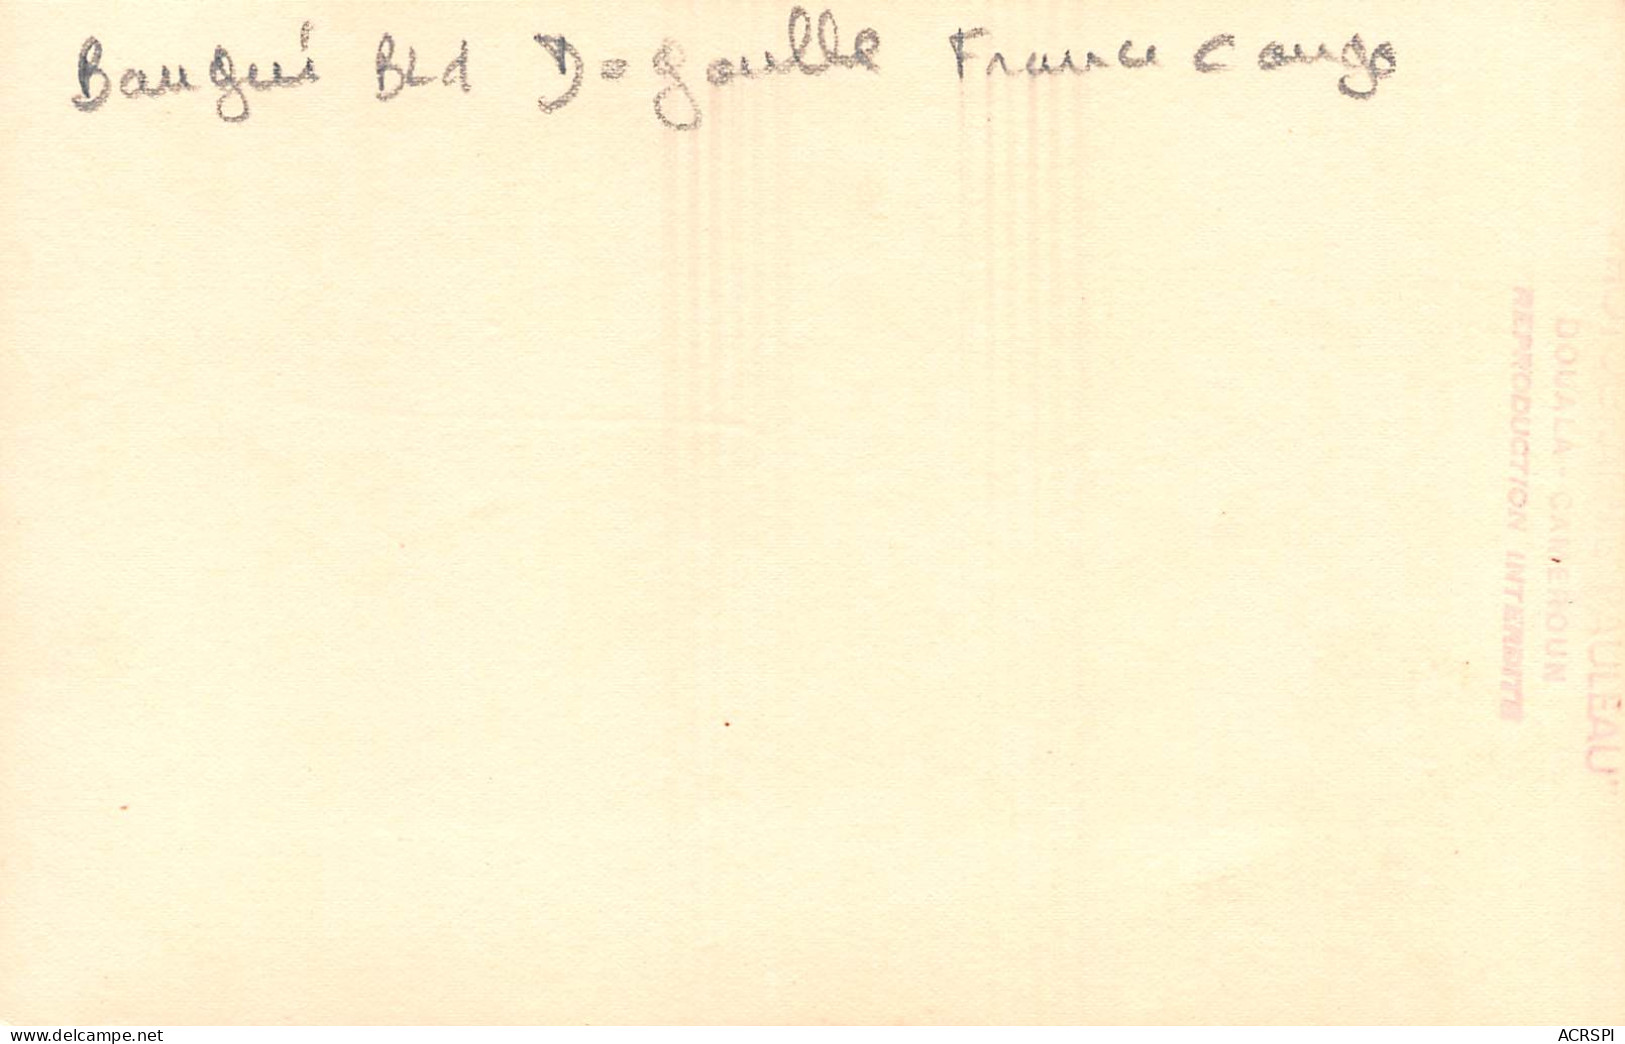 BANGUI République Centrafricaine France Congo Bld De Gaulle Photo PAULEA Non Circulé (Scan R/V) N° 53 \MP7121 - Centrafricaine (République)